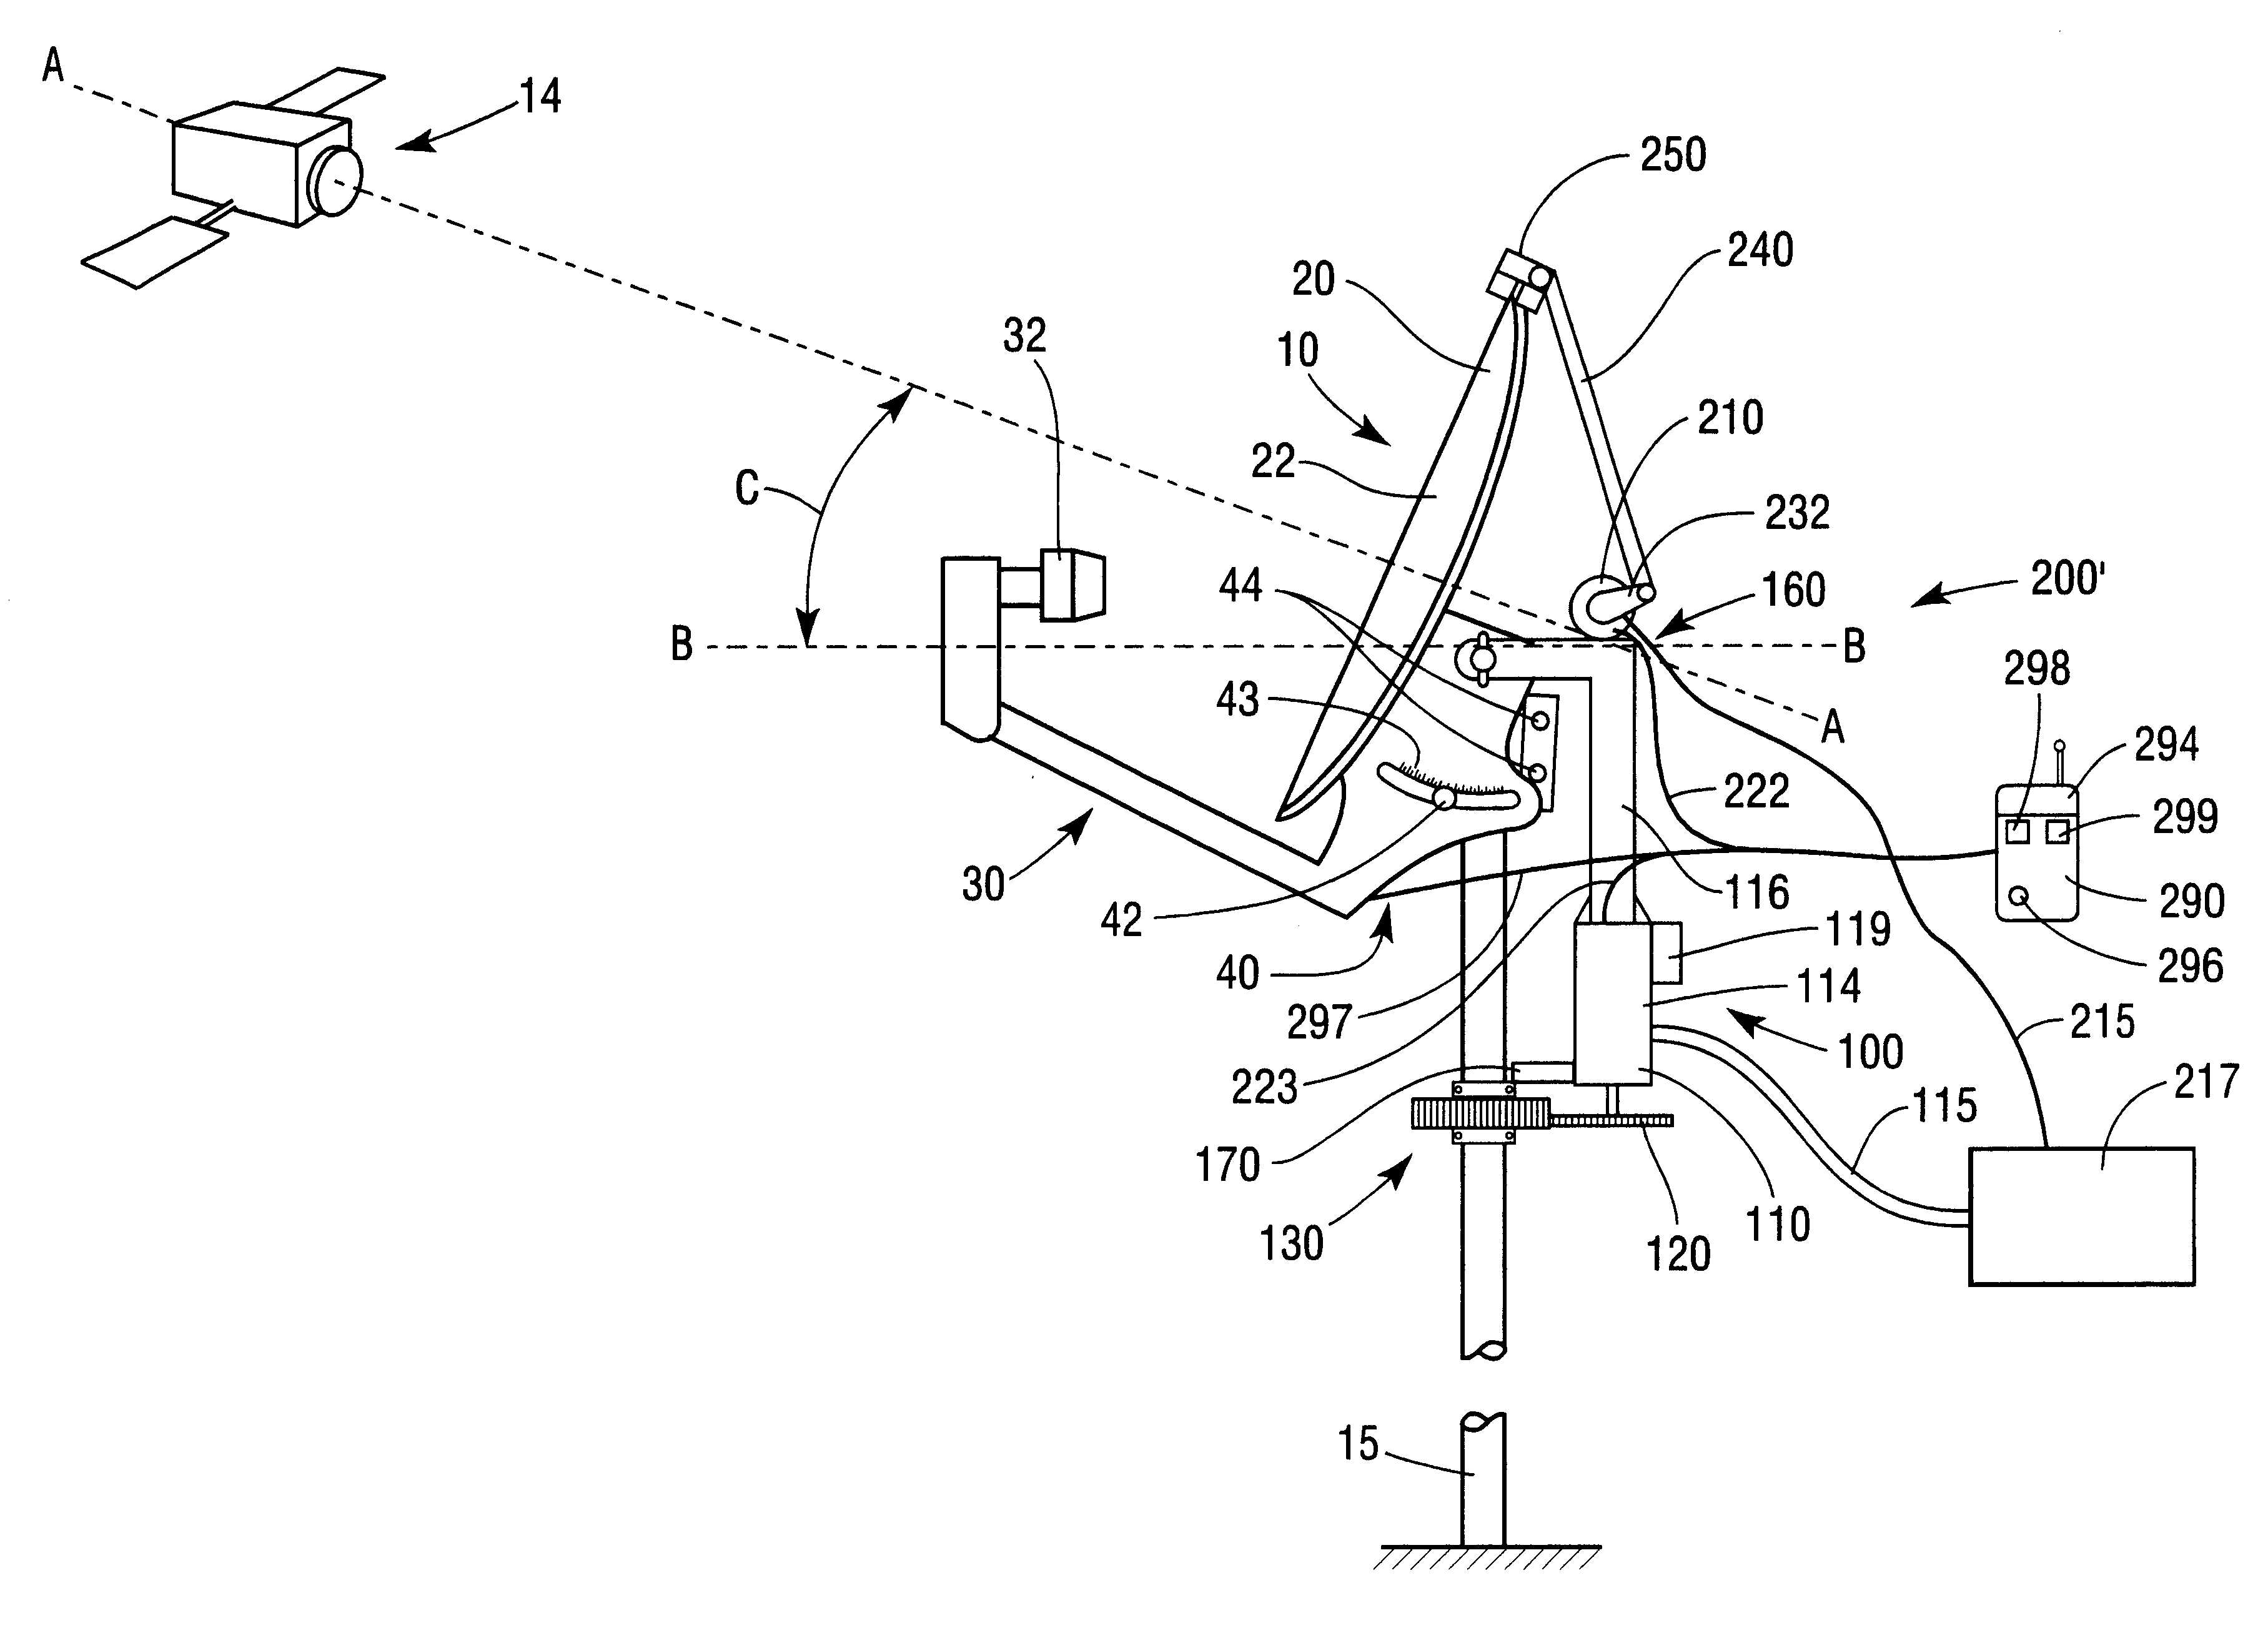 Motorized antenna pointing device